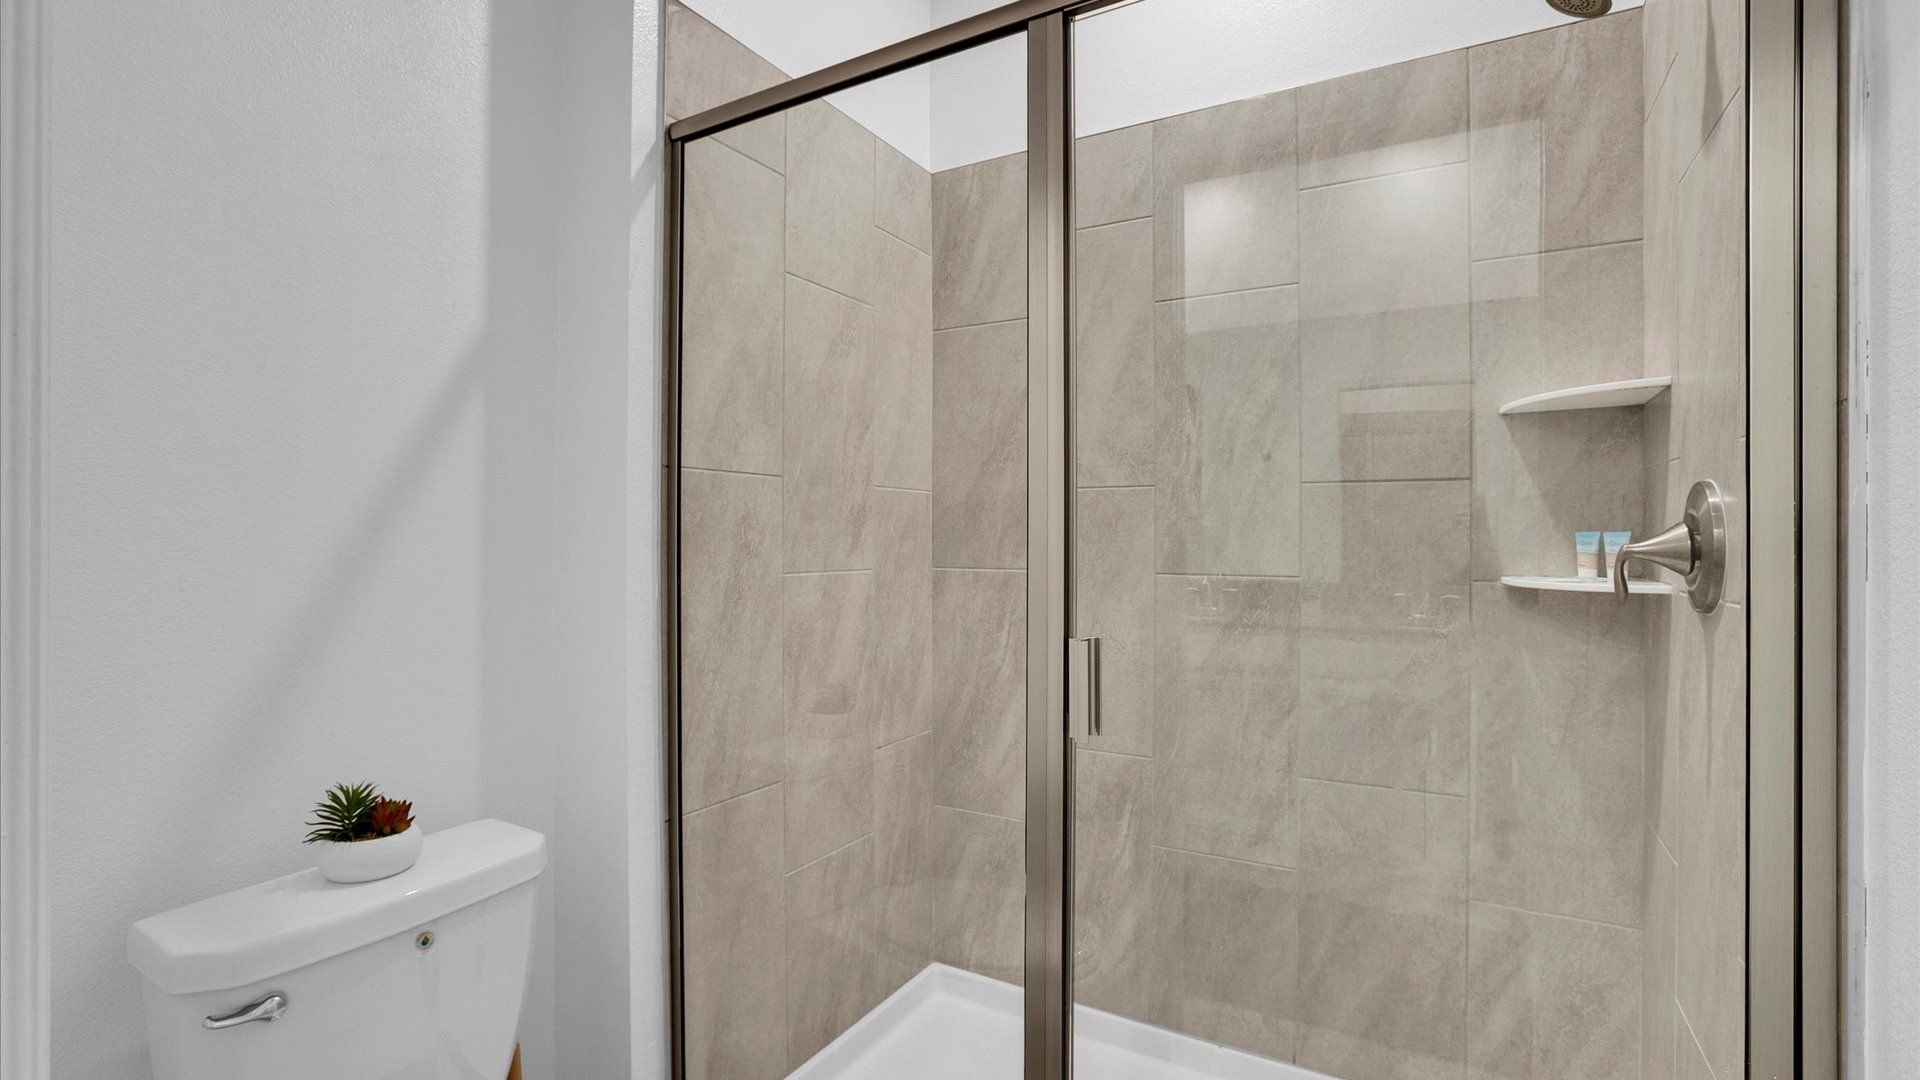 King Suite Bathroom 2 (Angle)
Shower